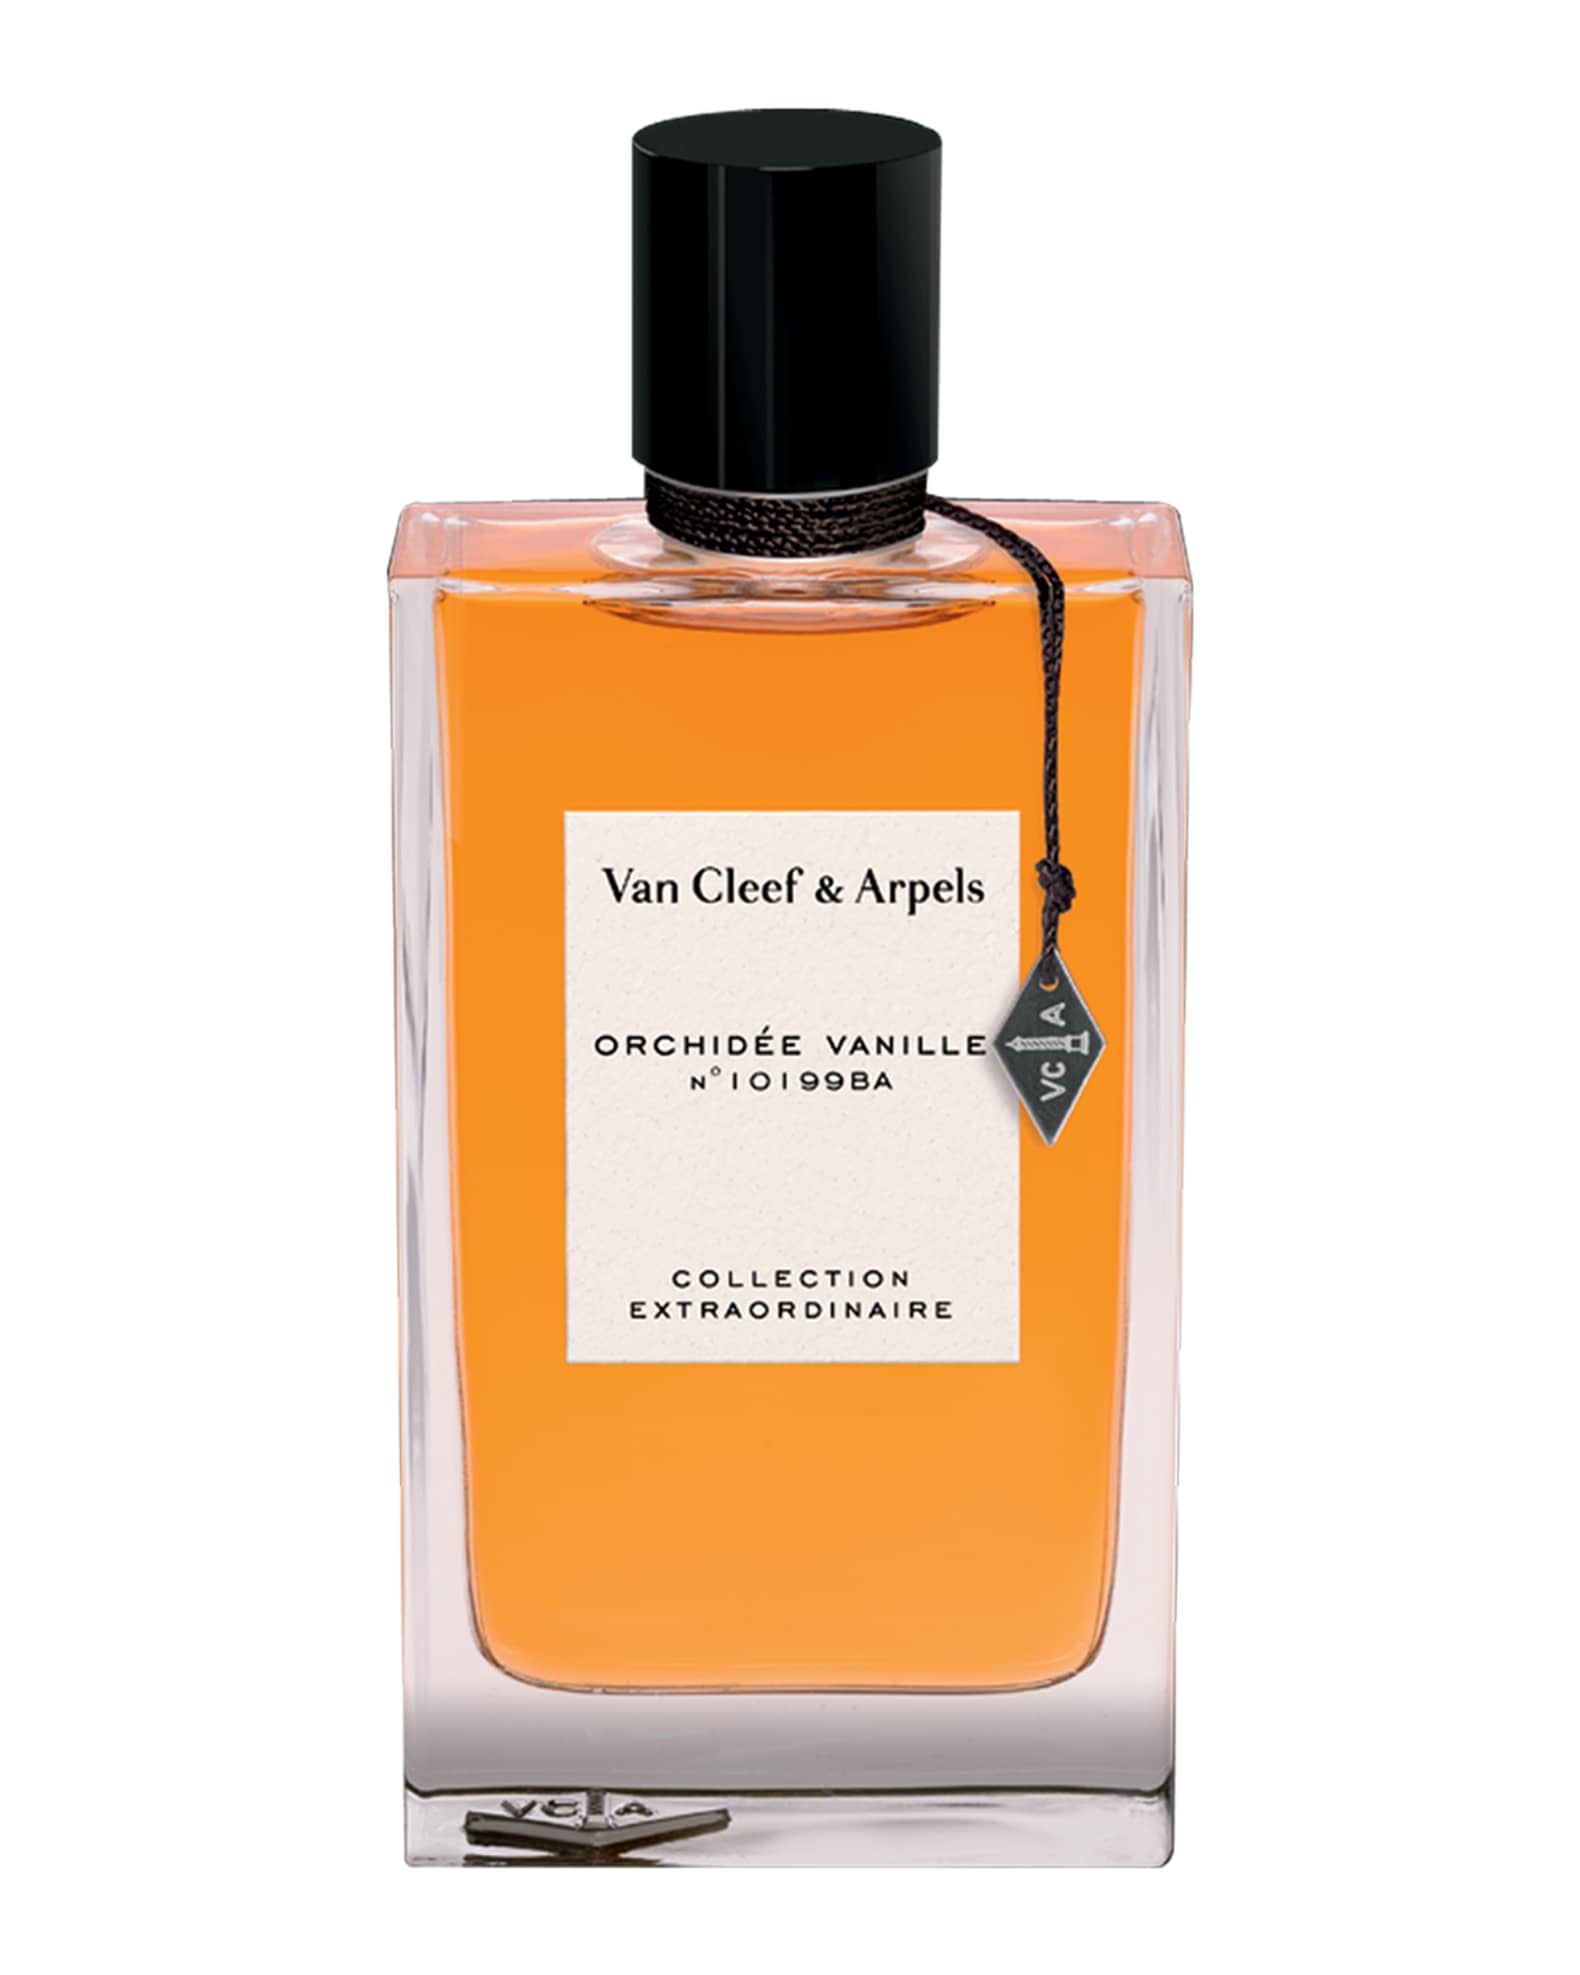 Van Cleef and Arpels Exclusive Collection Extraordinaire Orchidee Vanille perfume